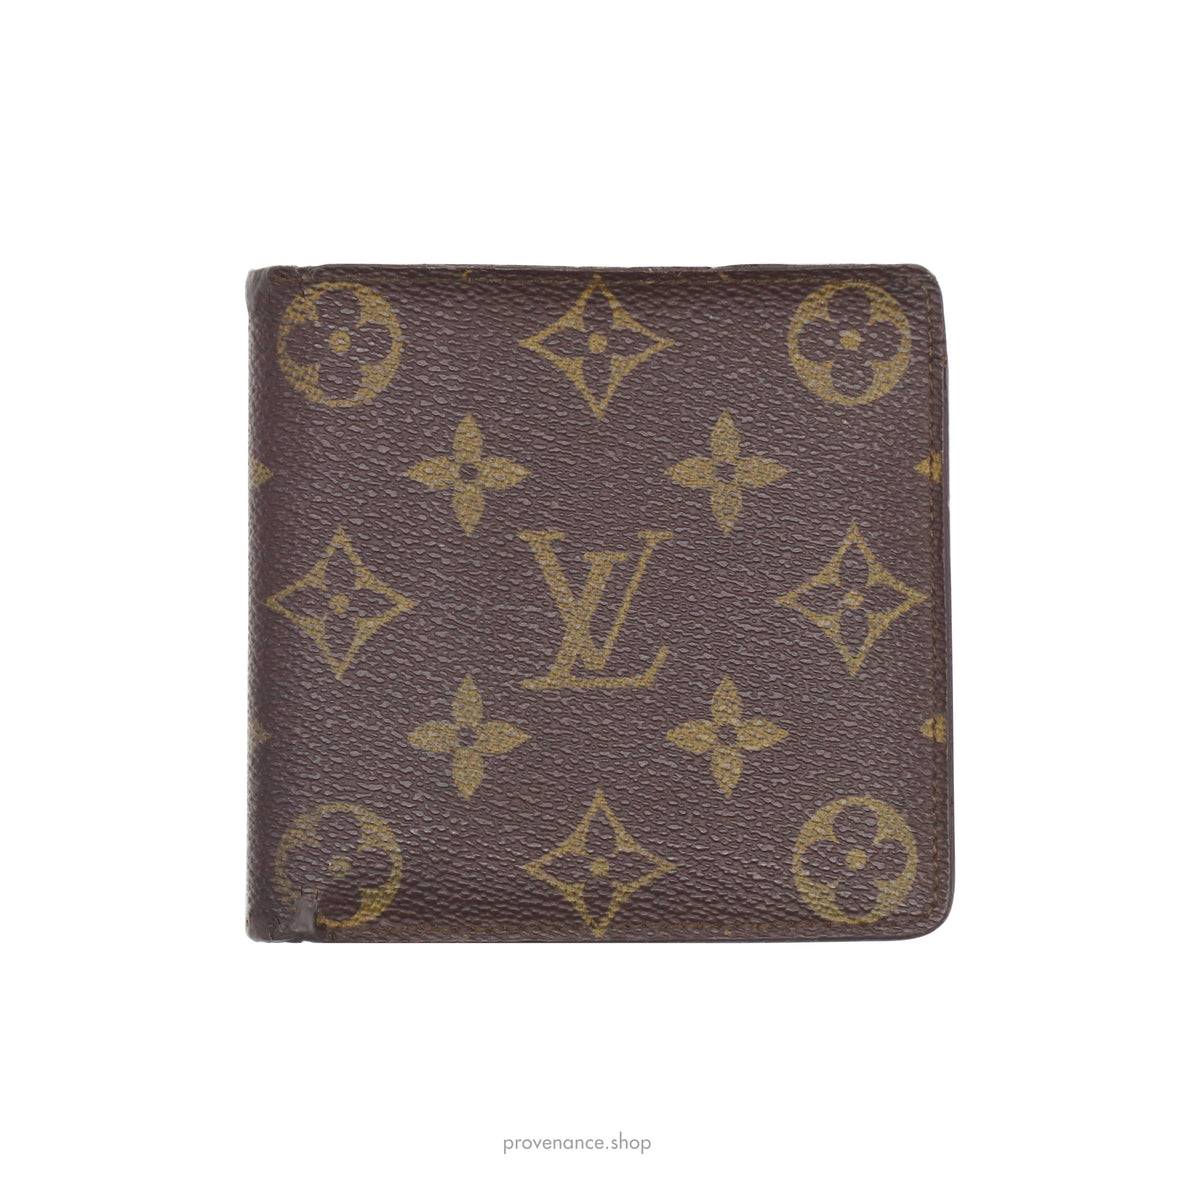 🟫 Louis Vuitton Marco Wallet - Monogram